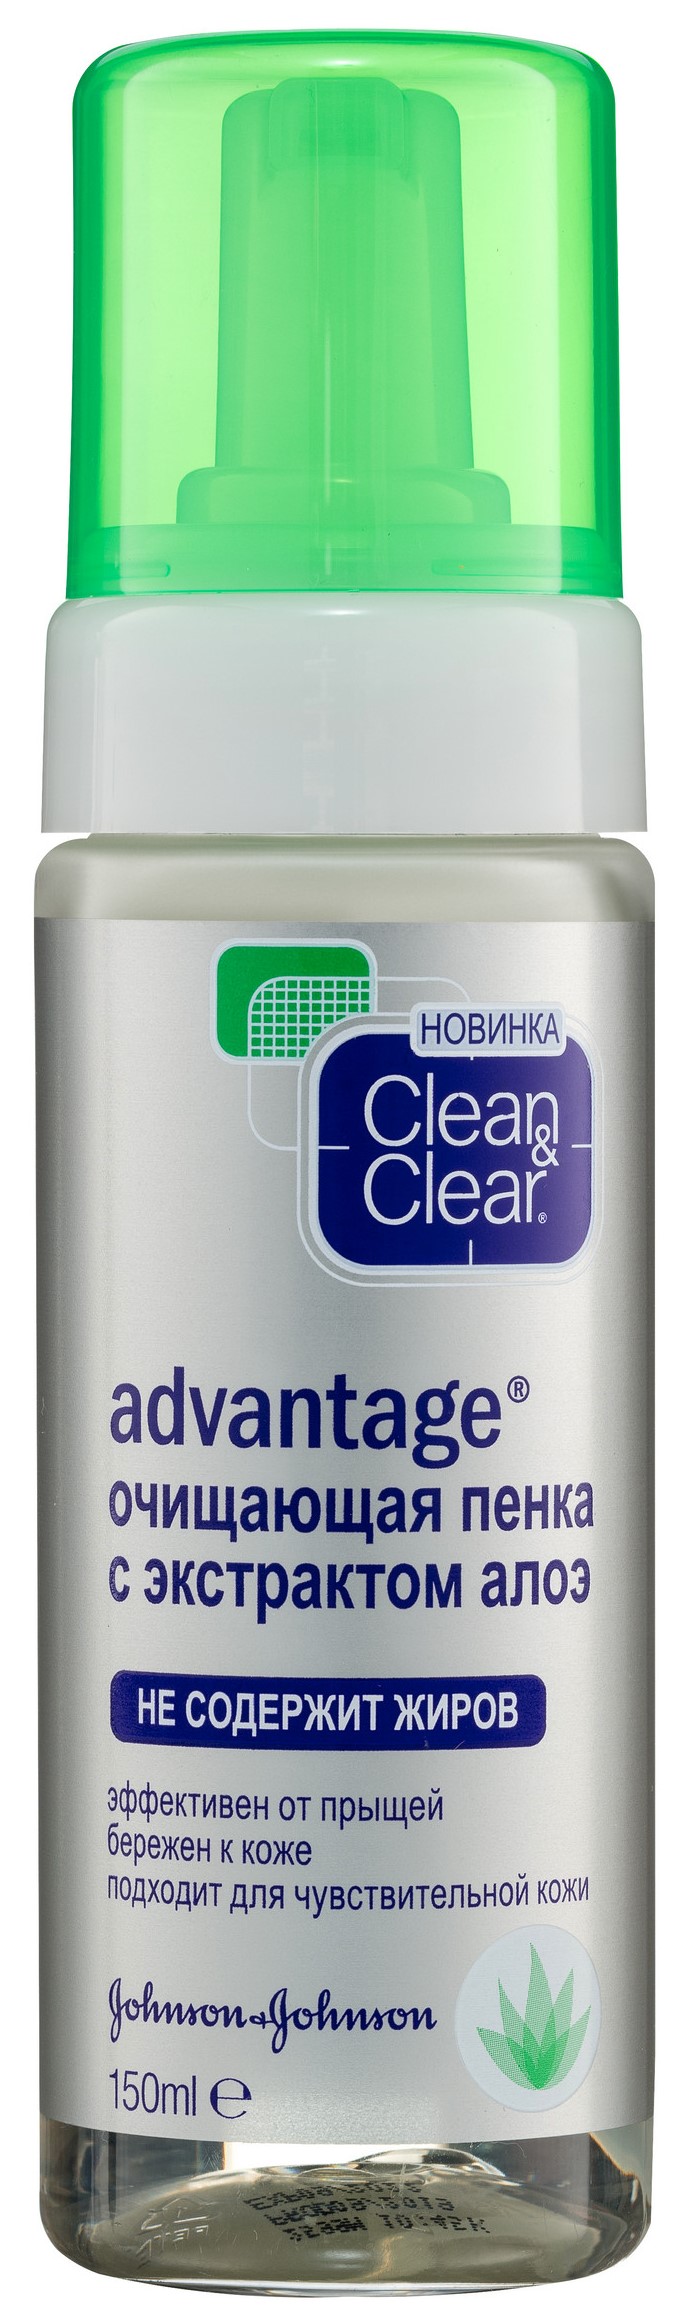 Очищающая пенка с экстрактом алоэ Clean&Clear Advantage 150 мл skin doctors крем для кожи лица корректирующий capillary clear 50